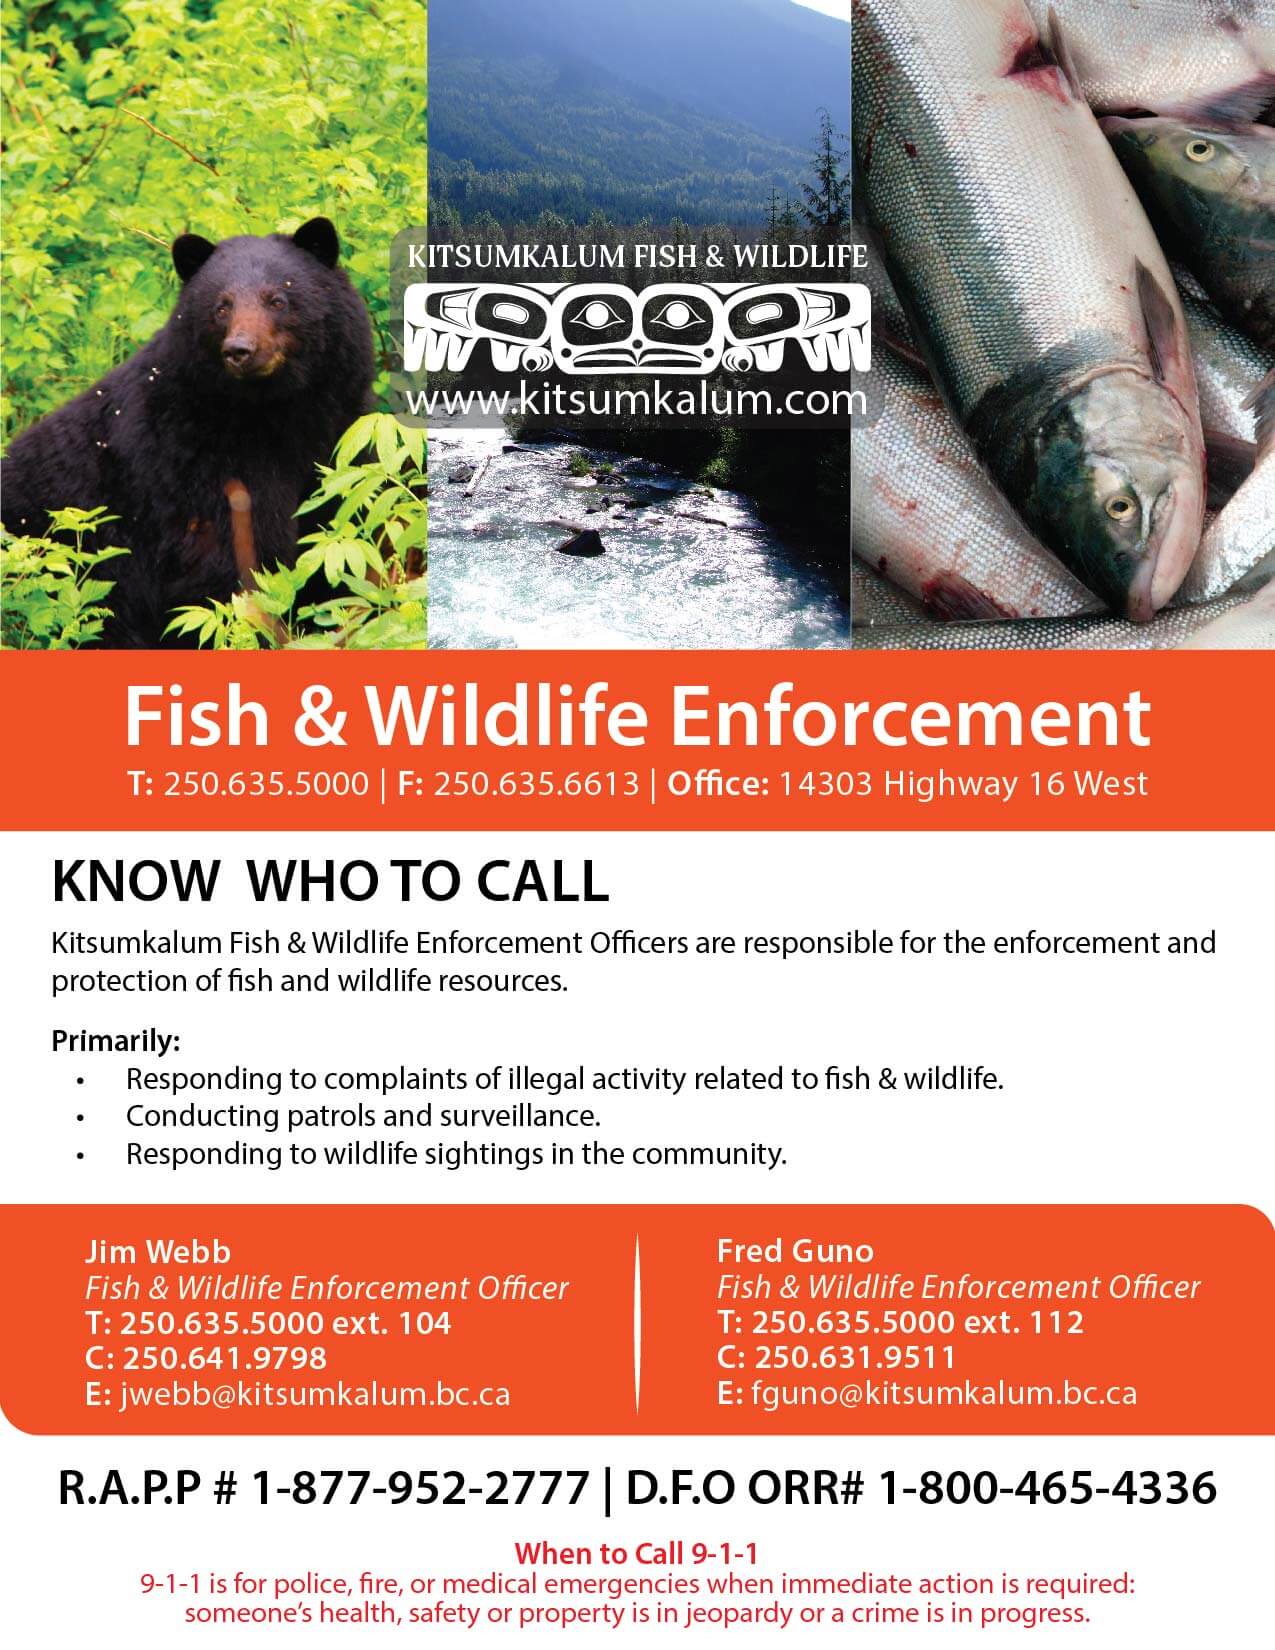 Kitsumkalum Fish & Wildlife Enforcement Contacts